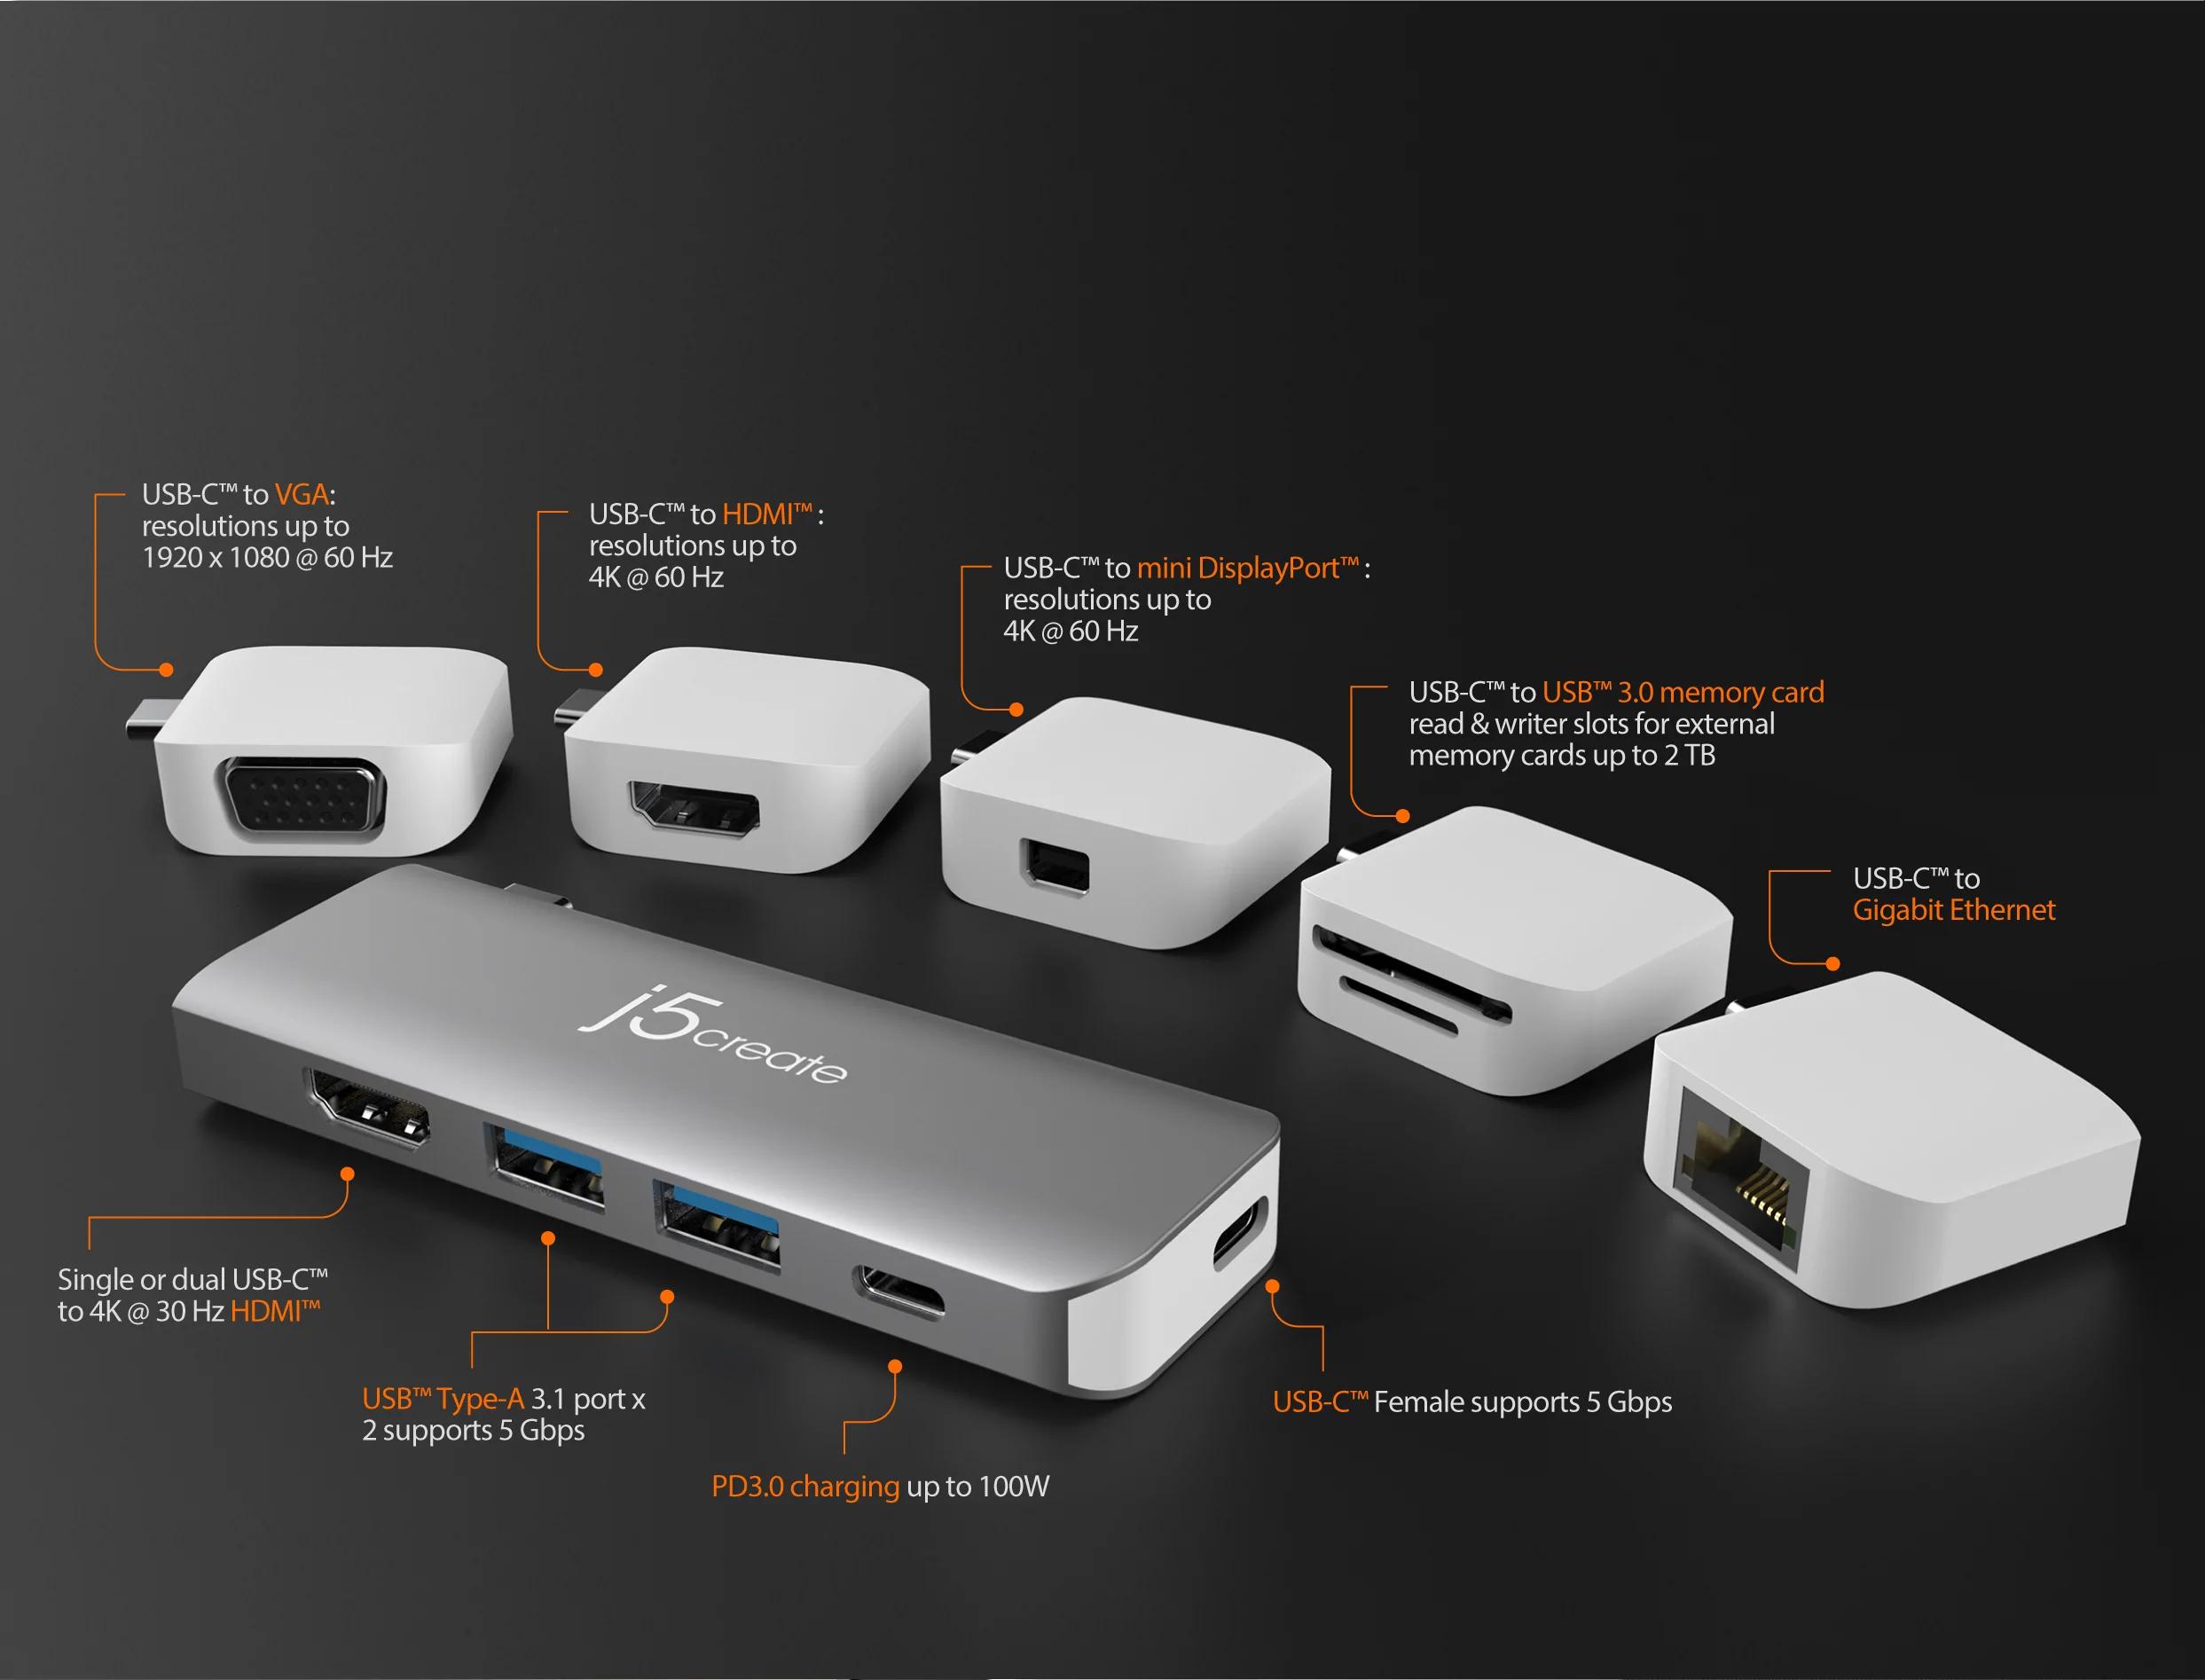 J5 Create Ultra Drive Kit USB C Multi-Display Modular Dock - JCD389